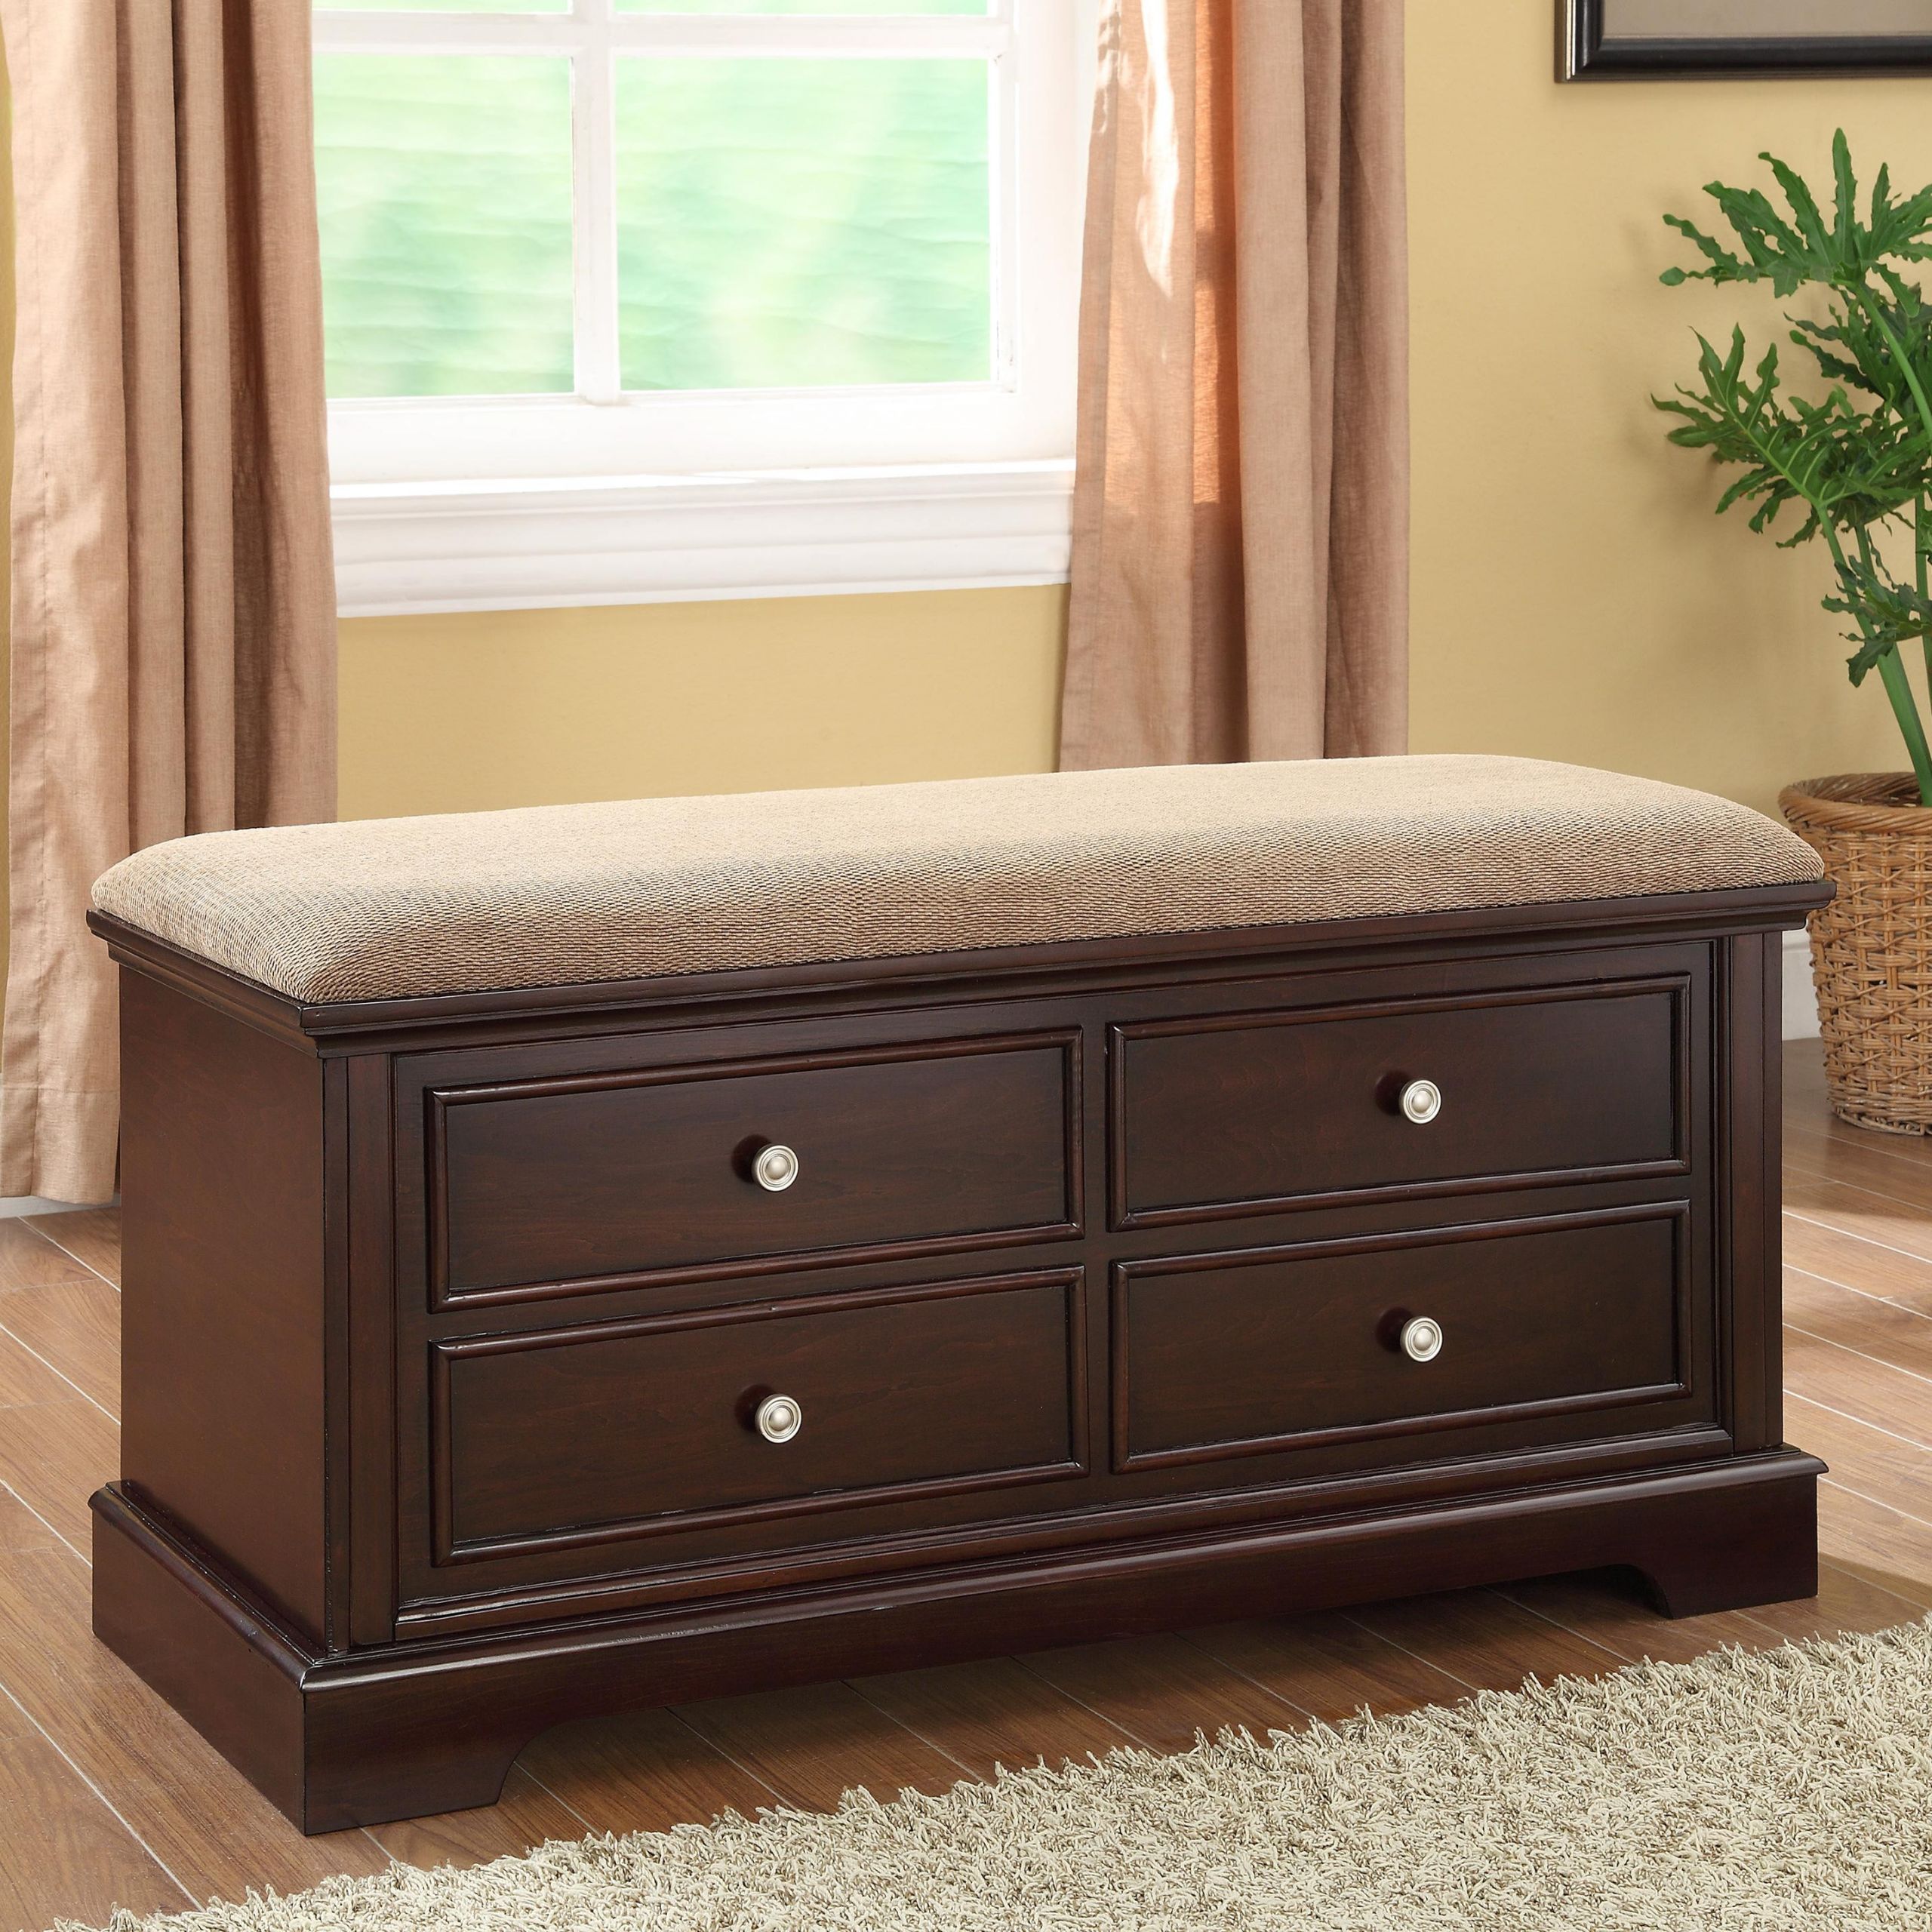 Bedroom Storage Chest Bench
 Del Sol CM Cedar Chest 4925 Upholstered Cedar Accent